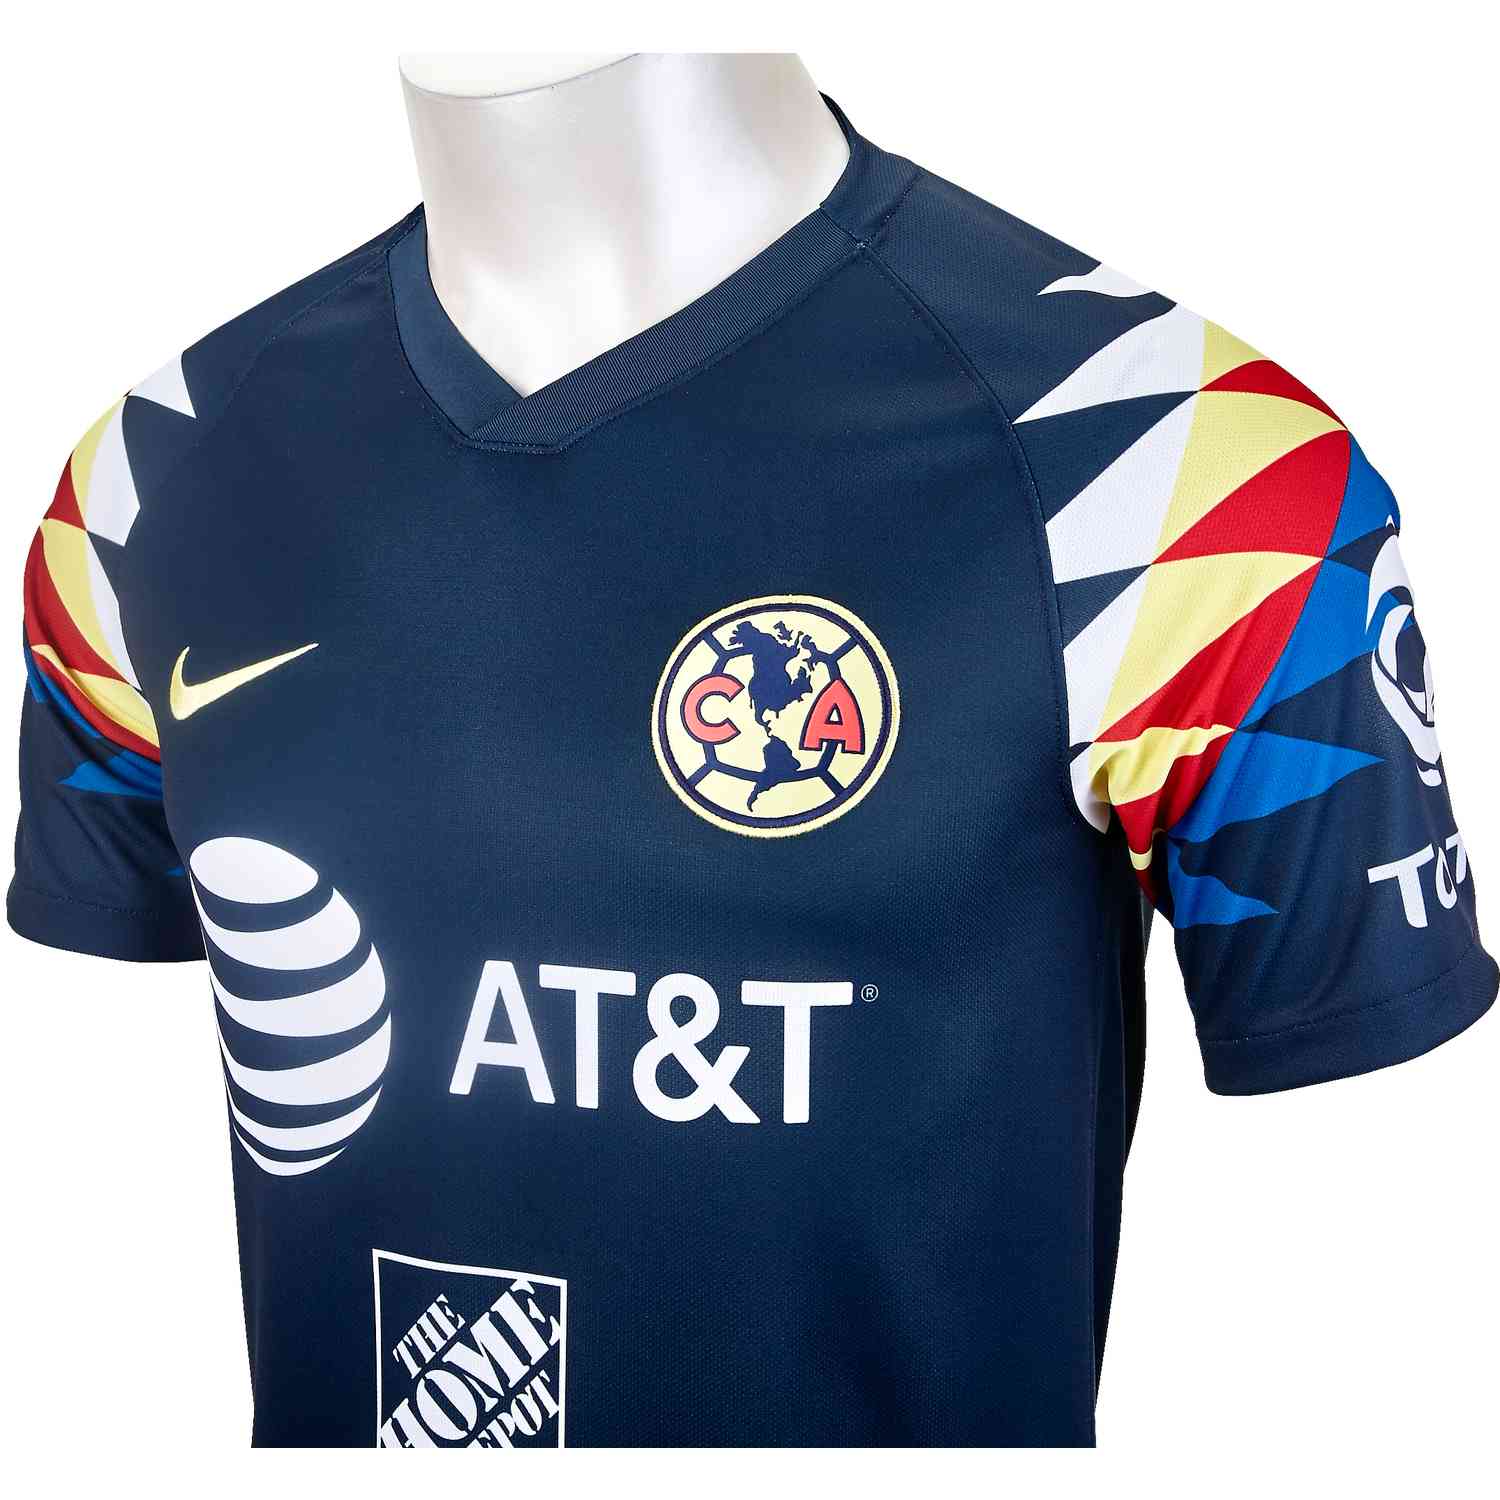 club america away jersey 2019